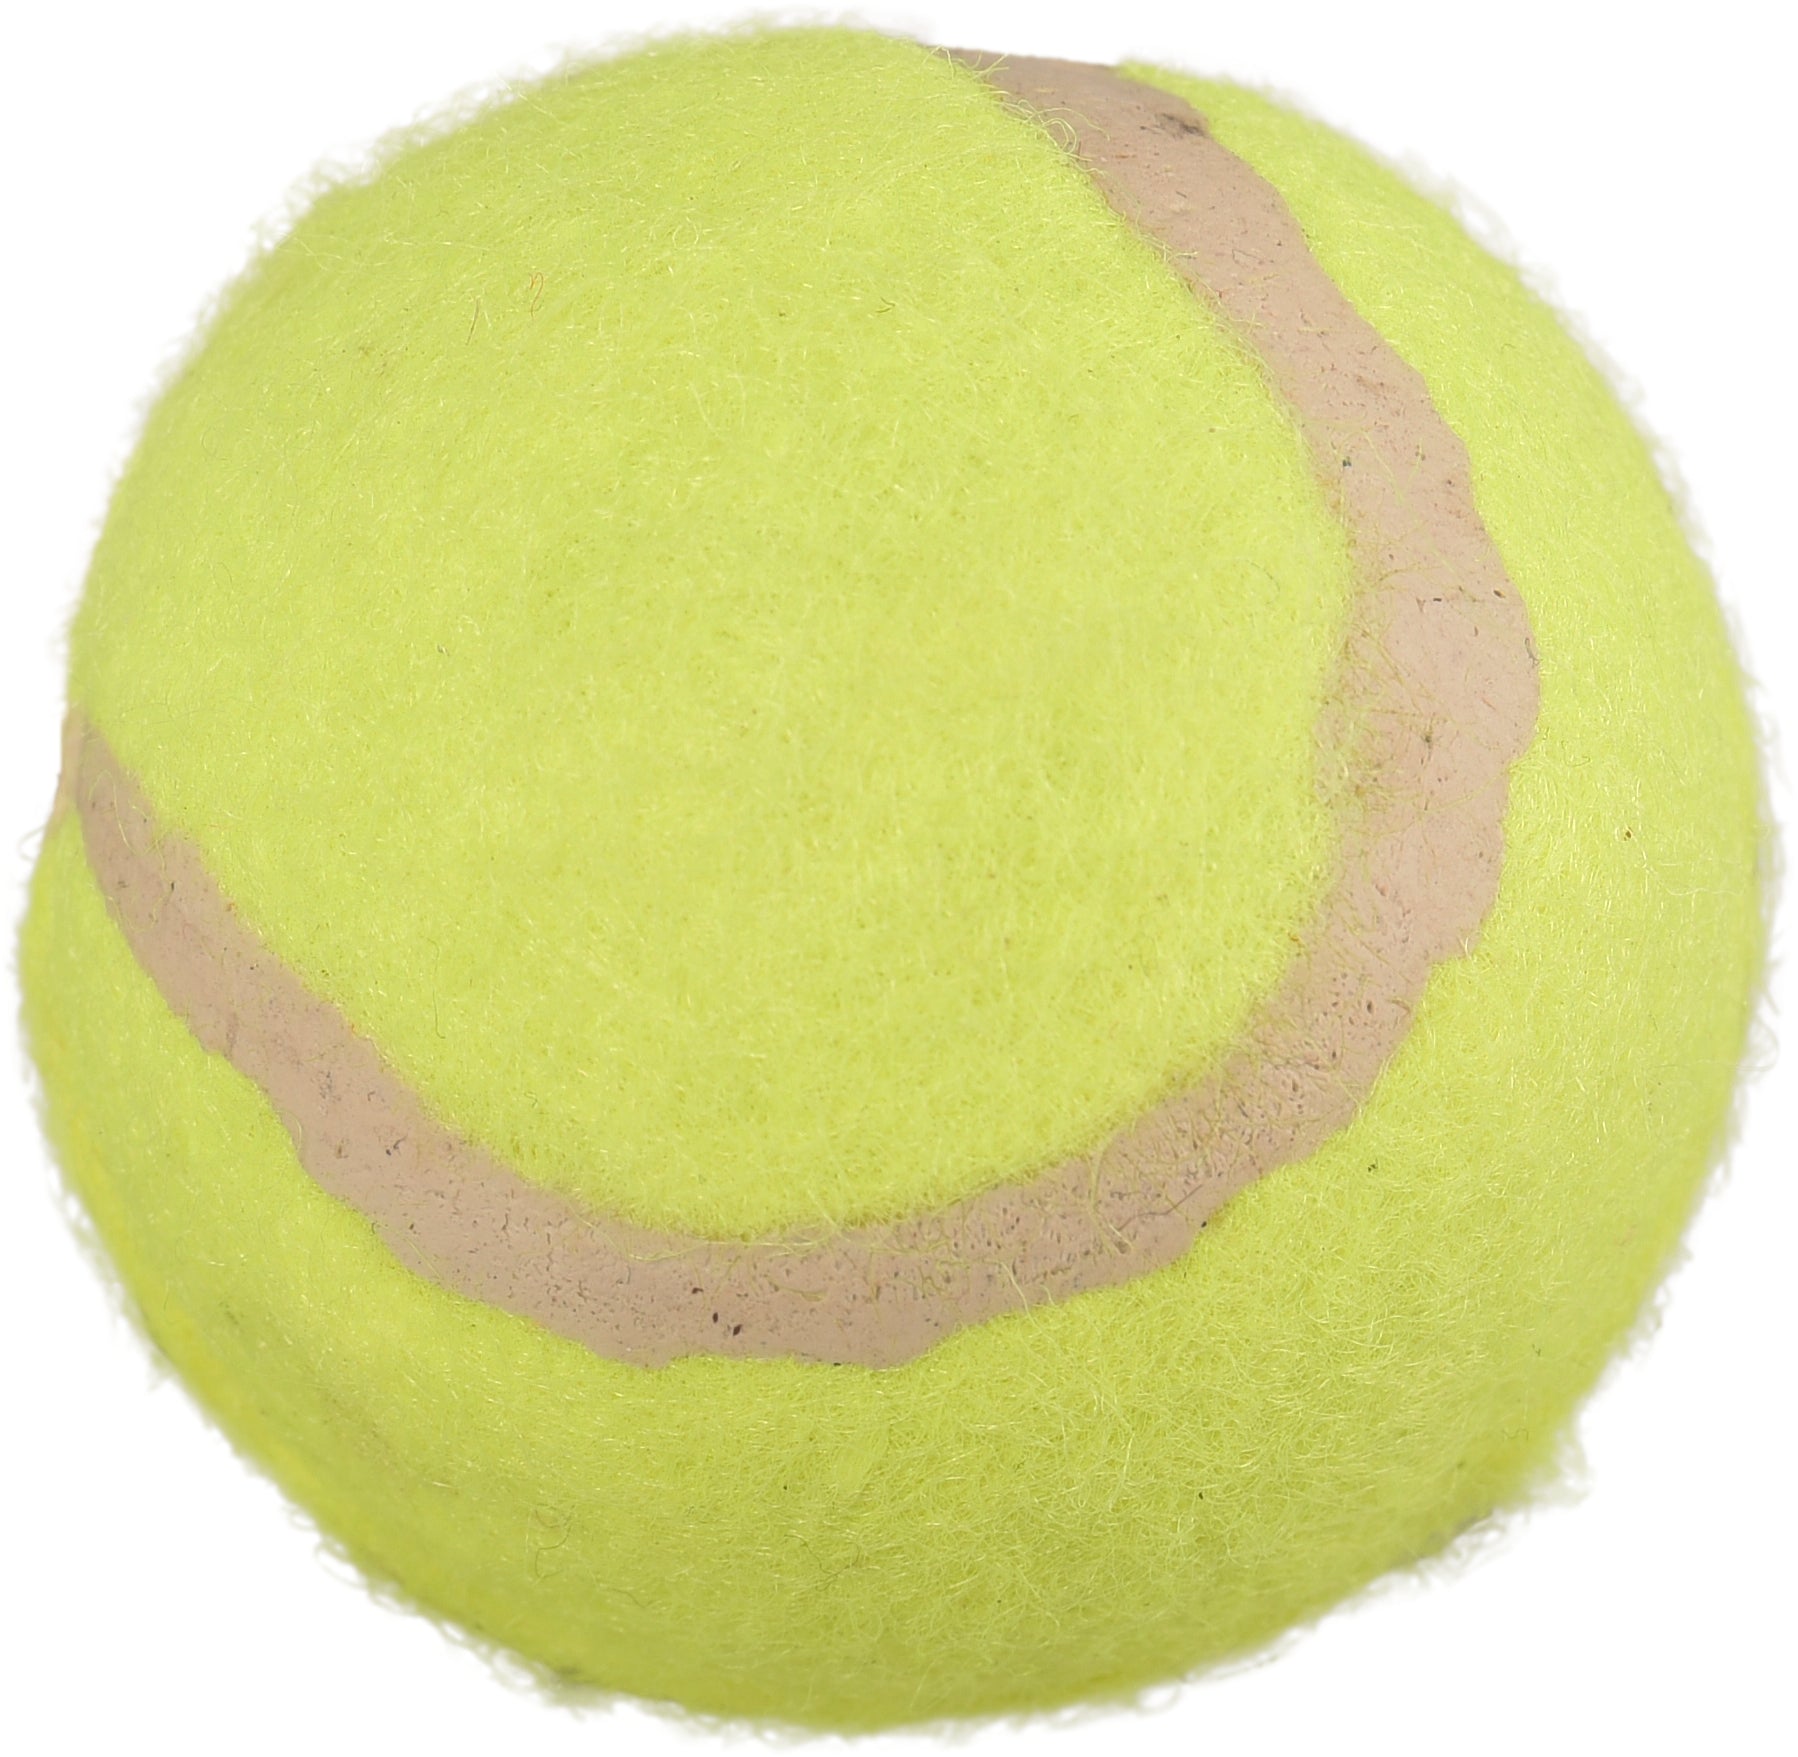 Hondenspeelgoed Tennisbal smash - Huisdierplezier